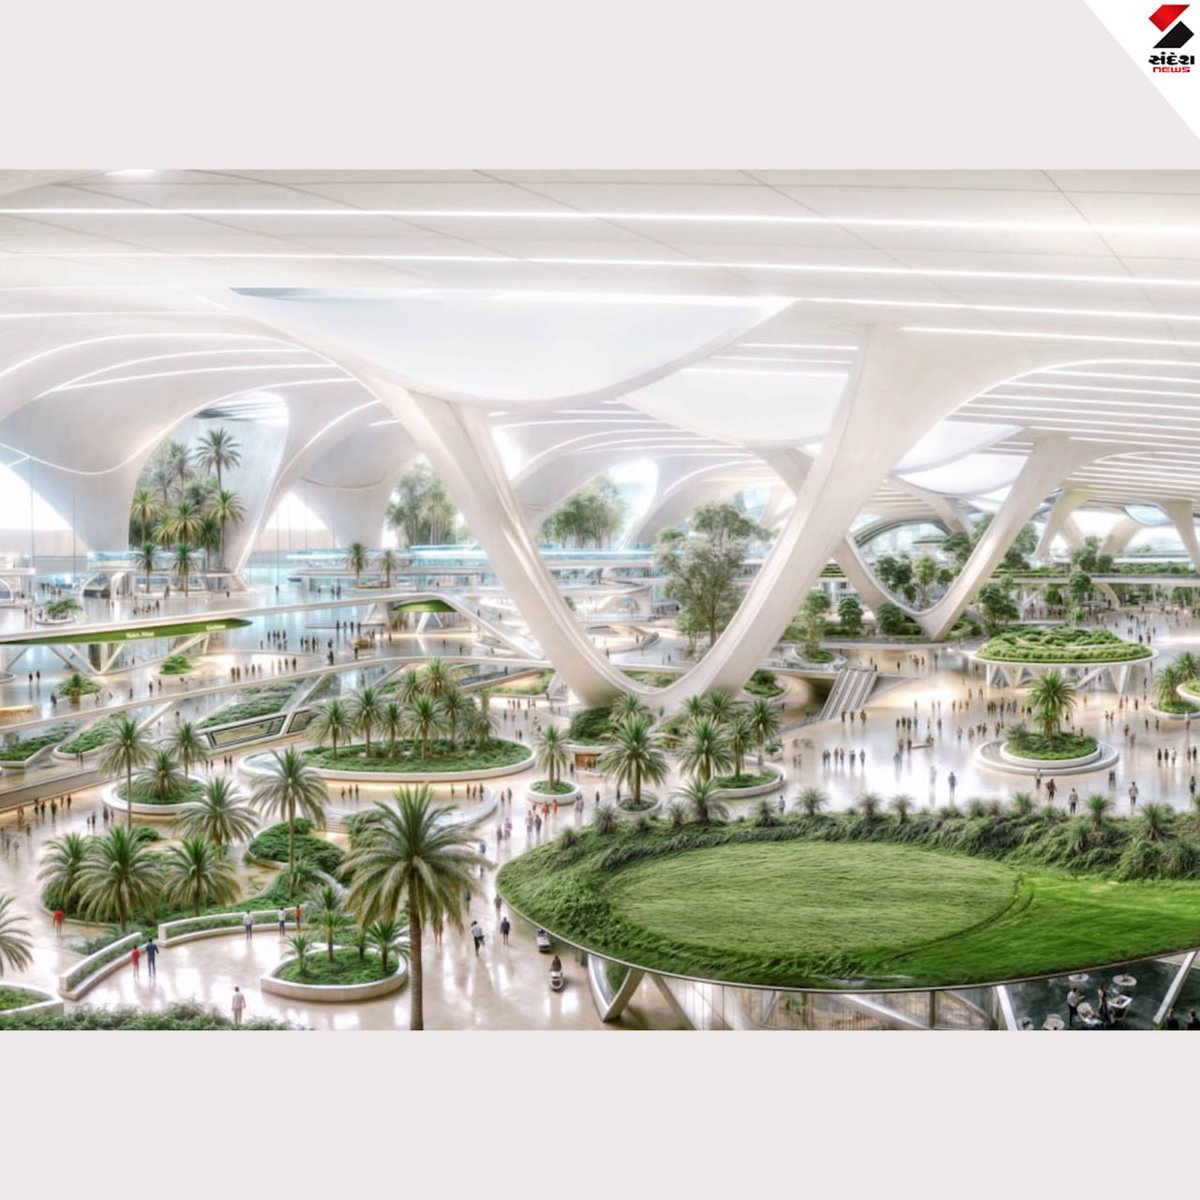 Dubaiમાં વિશ્વનું સૌથી મોટું એરપોર્ટ બનશે

UAE શાસક શેખ મોહમ્મદ બિન રાશિદ અલ મકતૂમે જાહેરાત કરી
એરપોર્ટમાં 5 રન-વે, 400 ગેટ હશે
એરપોર્ટ પર કુલ 35 બિલિયન અમેરિકન ડોલરનો ખર્ચ થશે

#dubai #dubaiairport #airportnews #biggestairport #worldbiggestairport #dubaiairportnews #SandeshNews